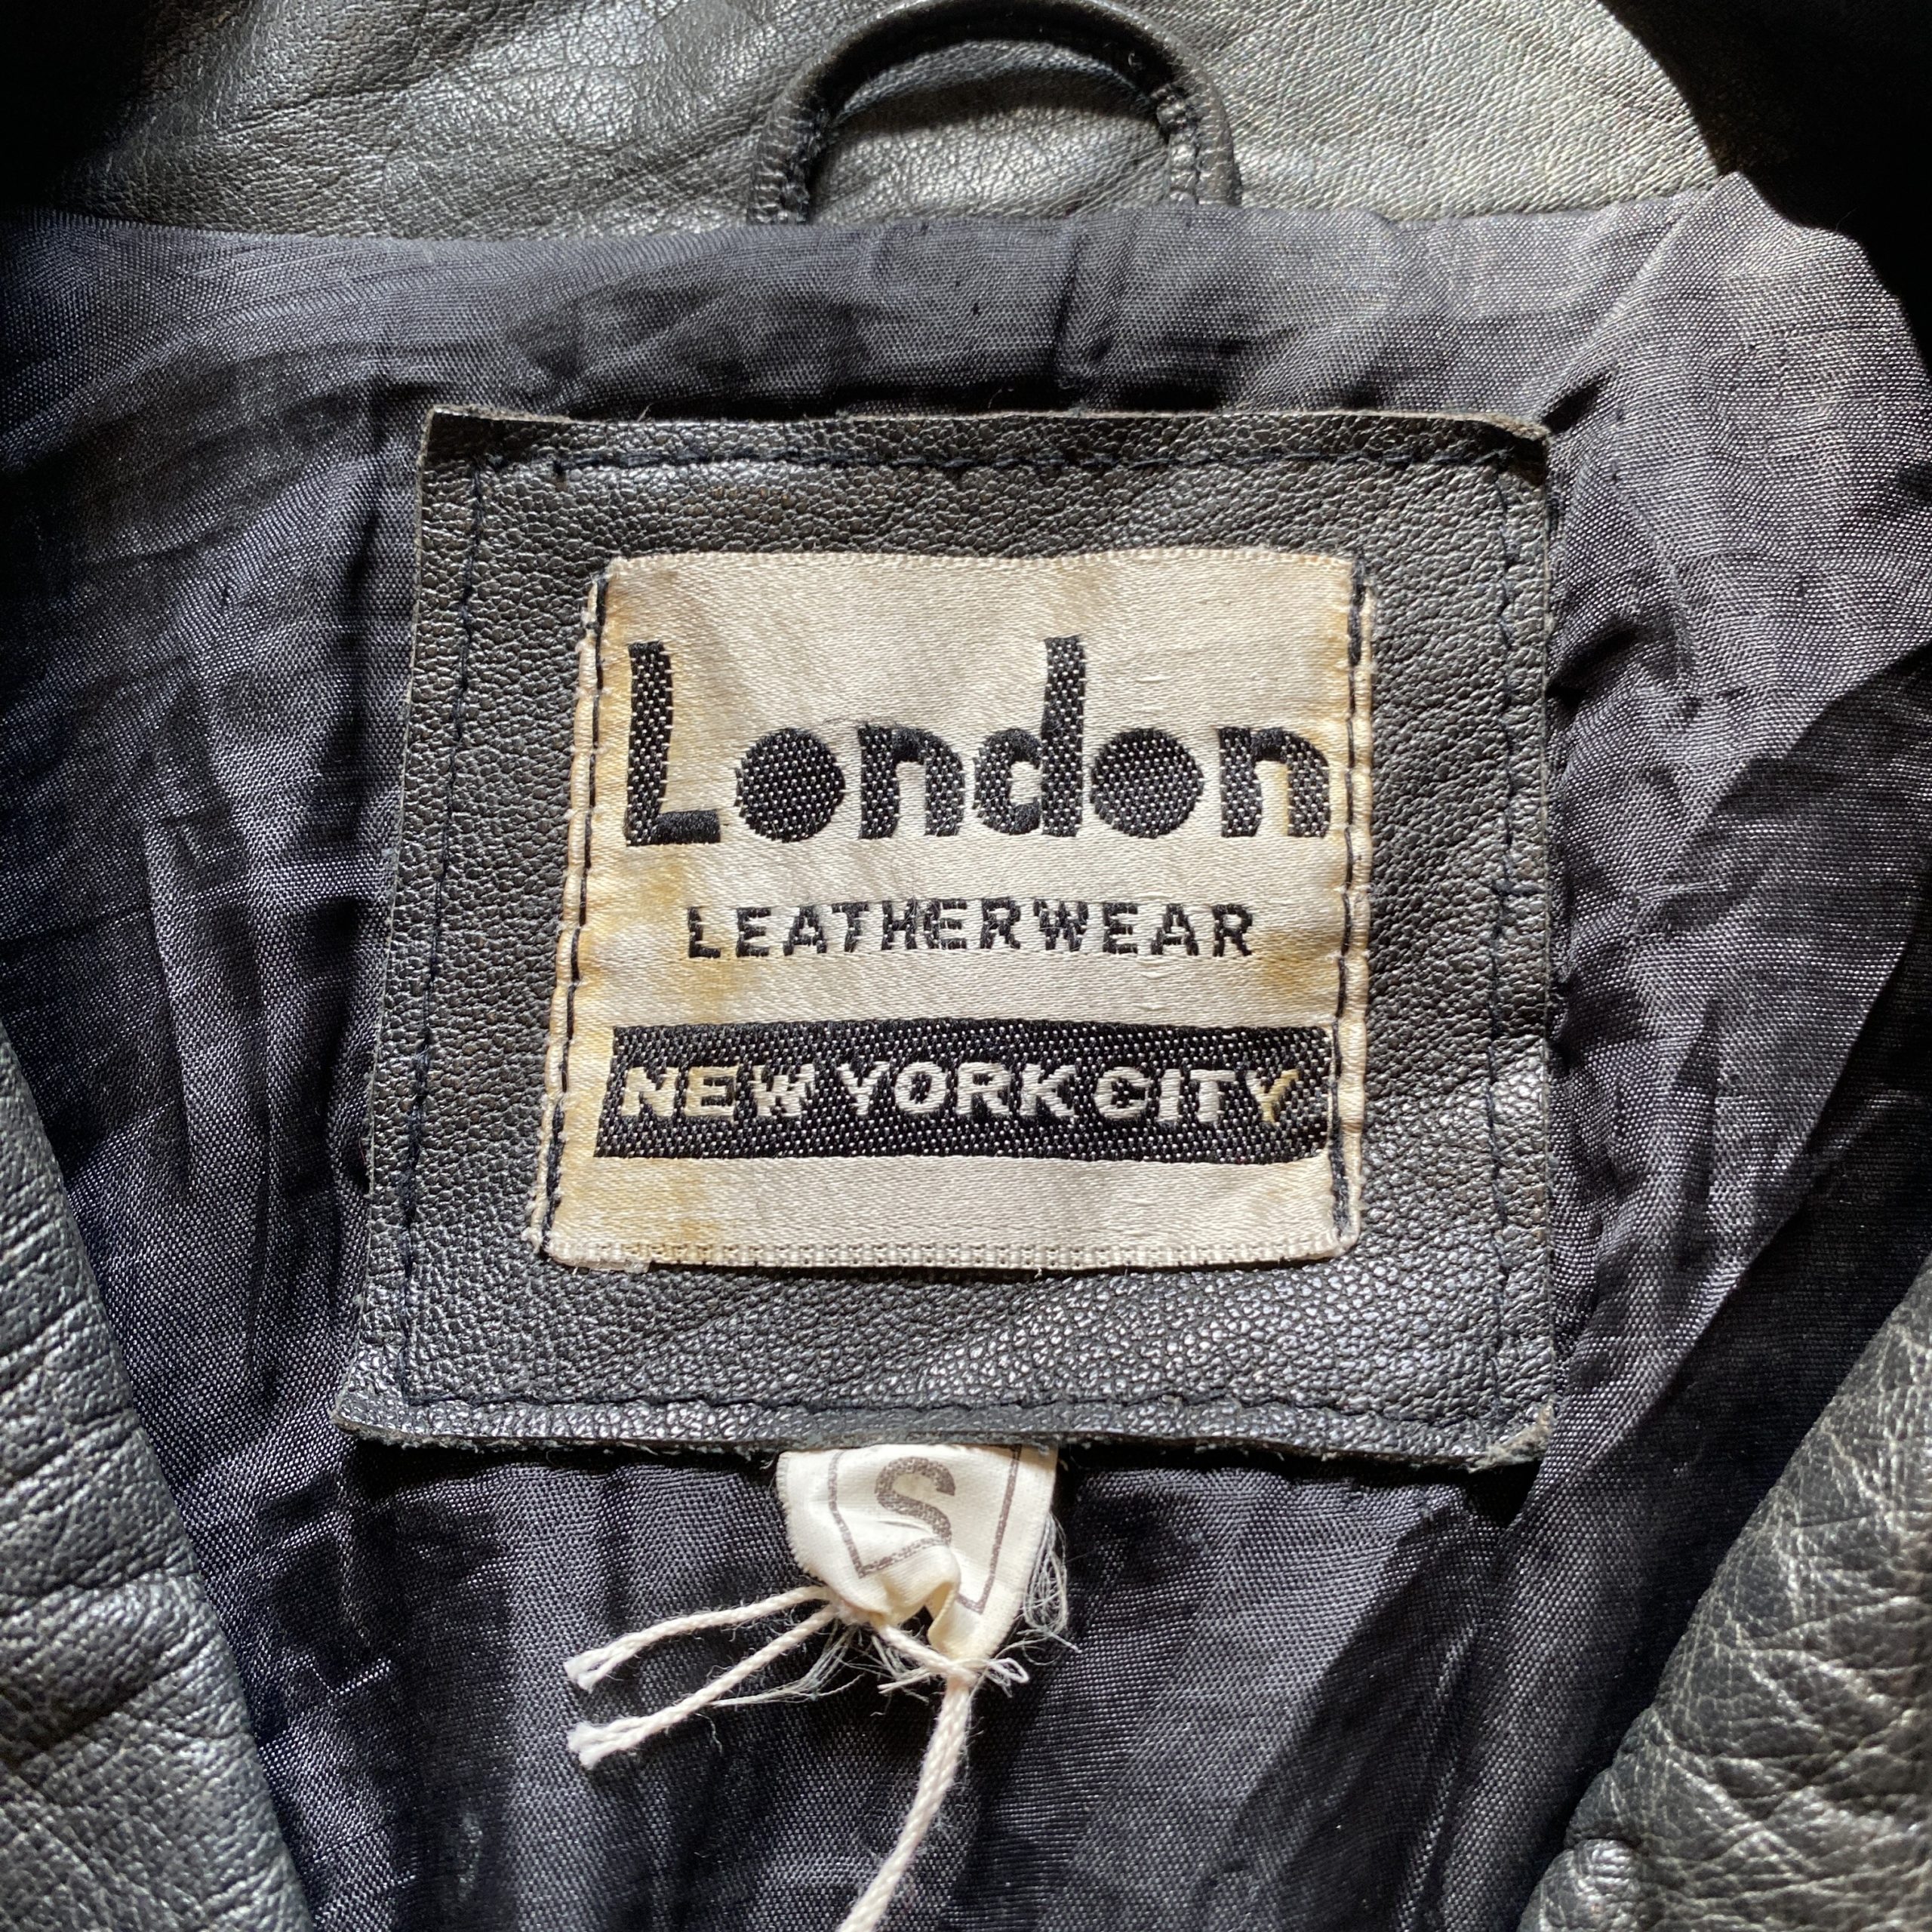 1980's London leather wear ライダースジャケット-